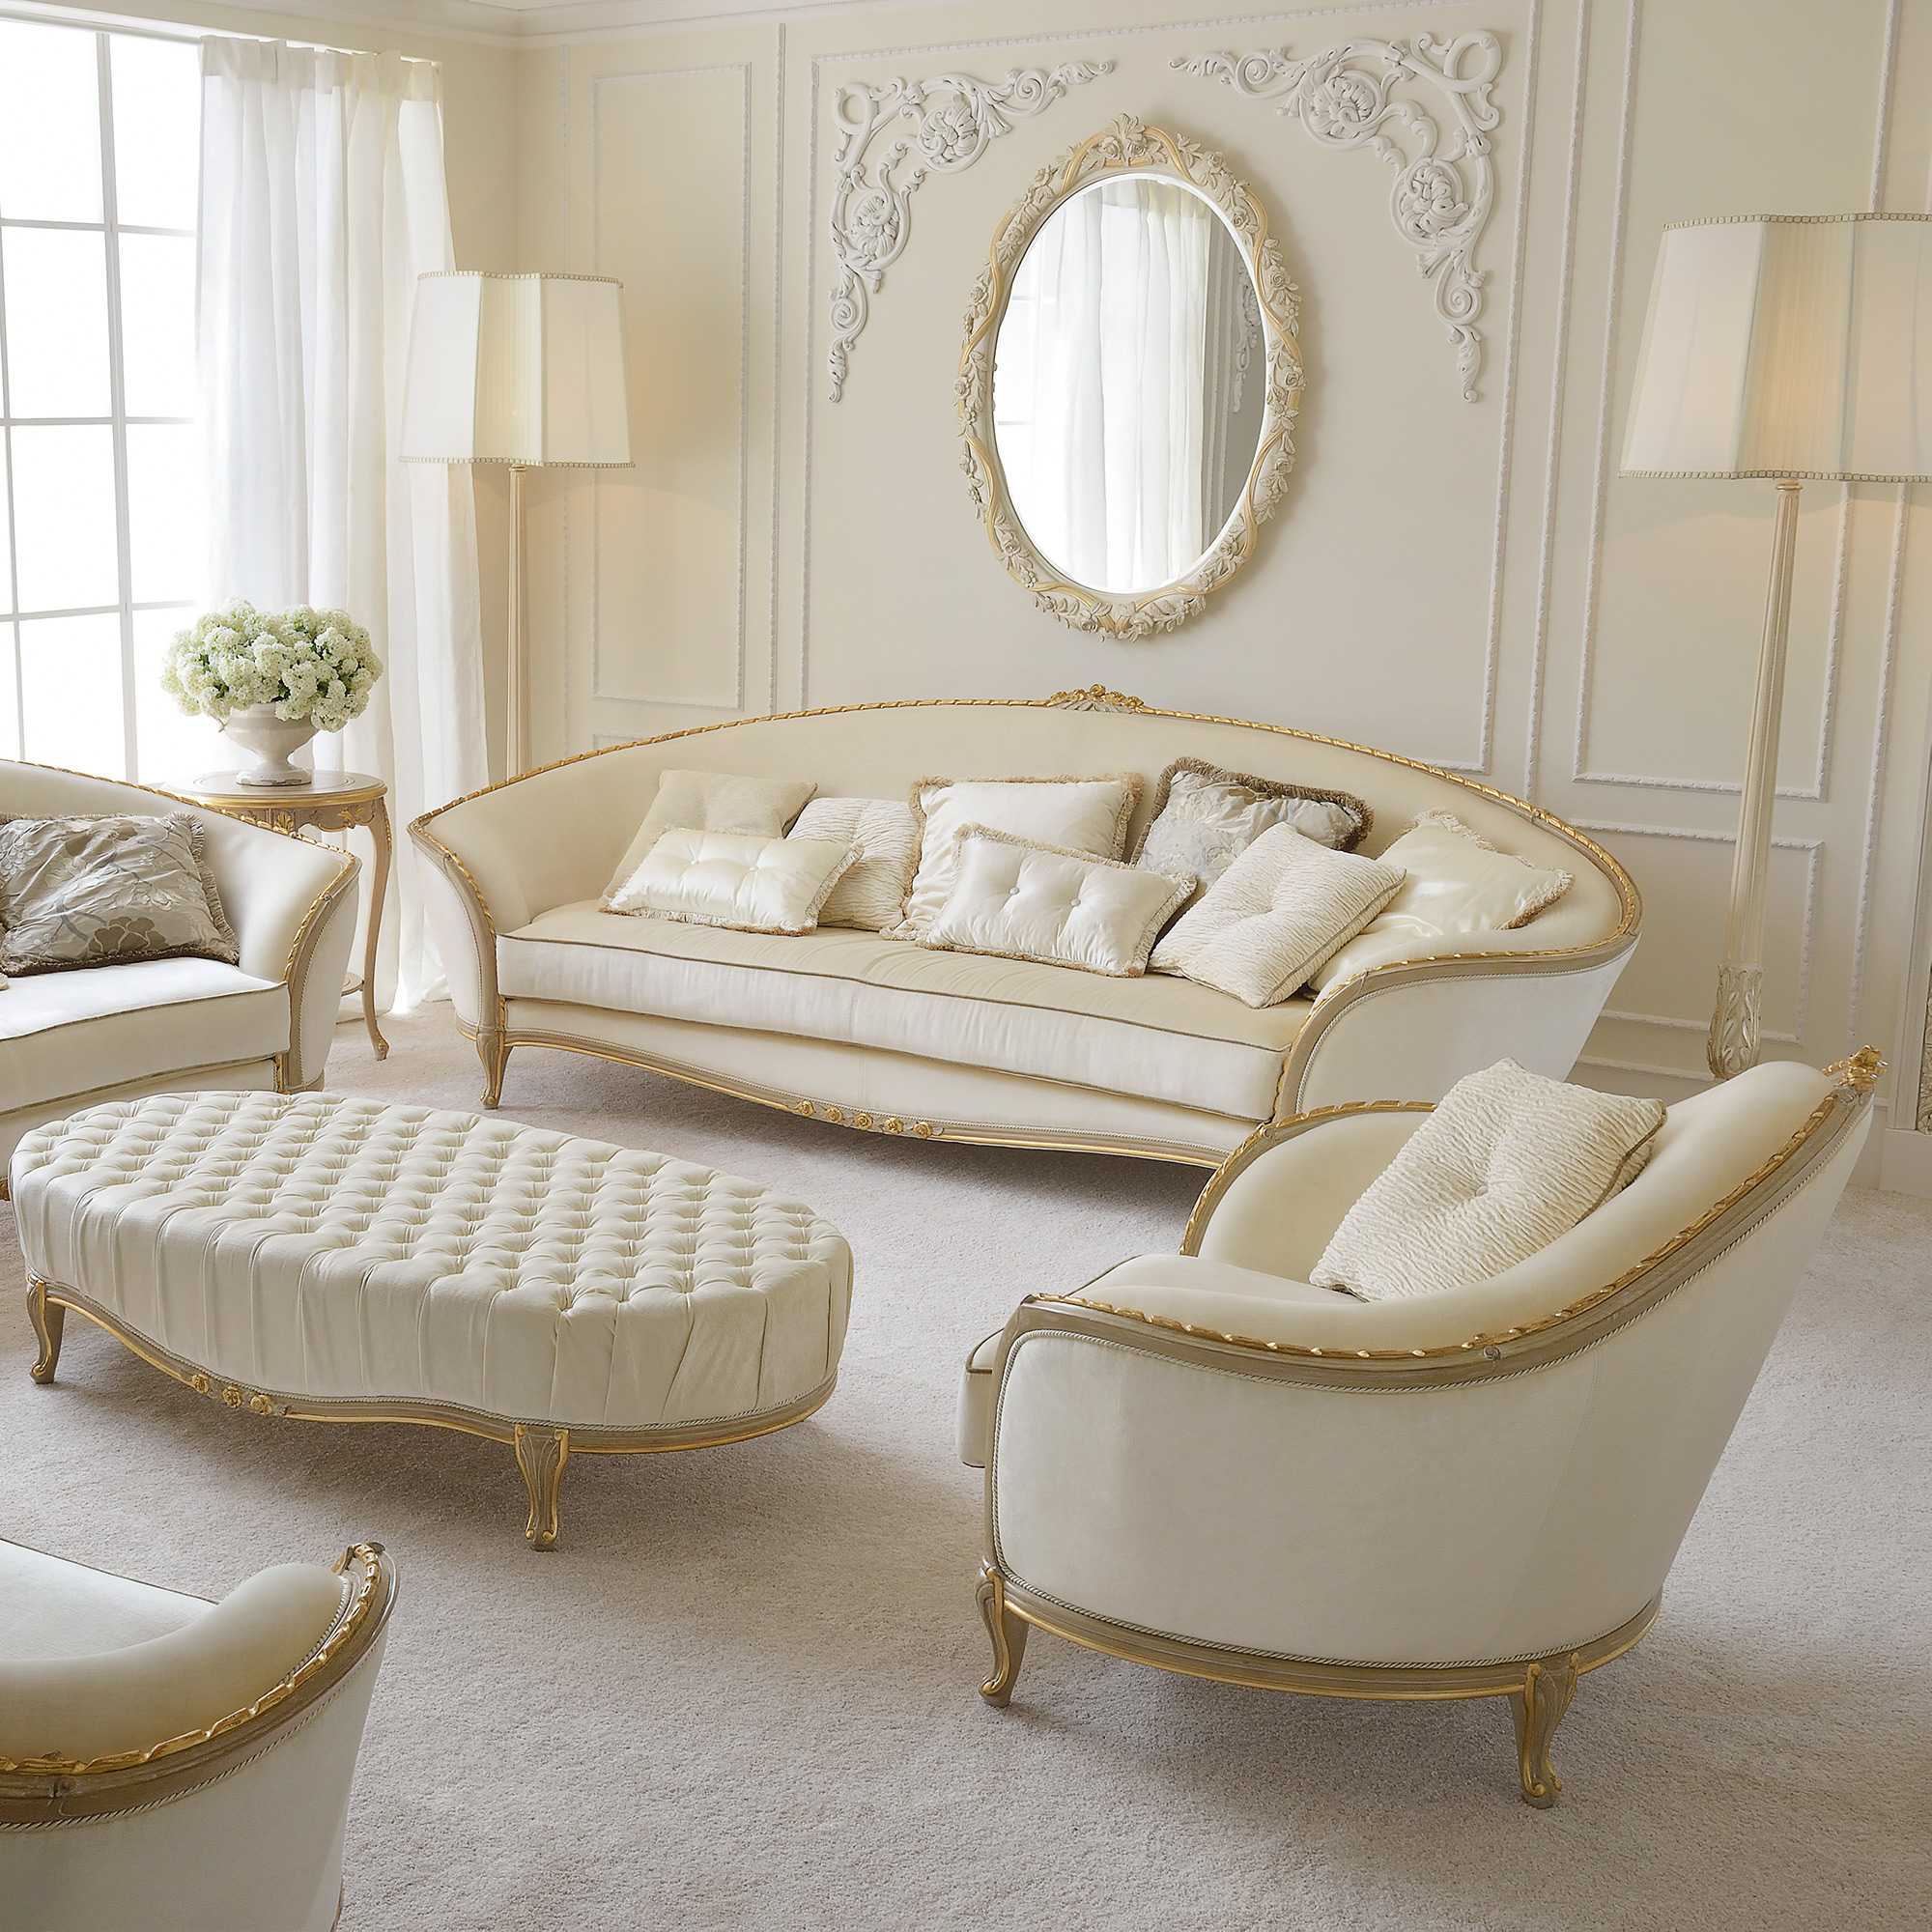 luxury european living room furniture, luxury european living room furniture  Suppliers and Manufacturers at Alibaba.com